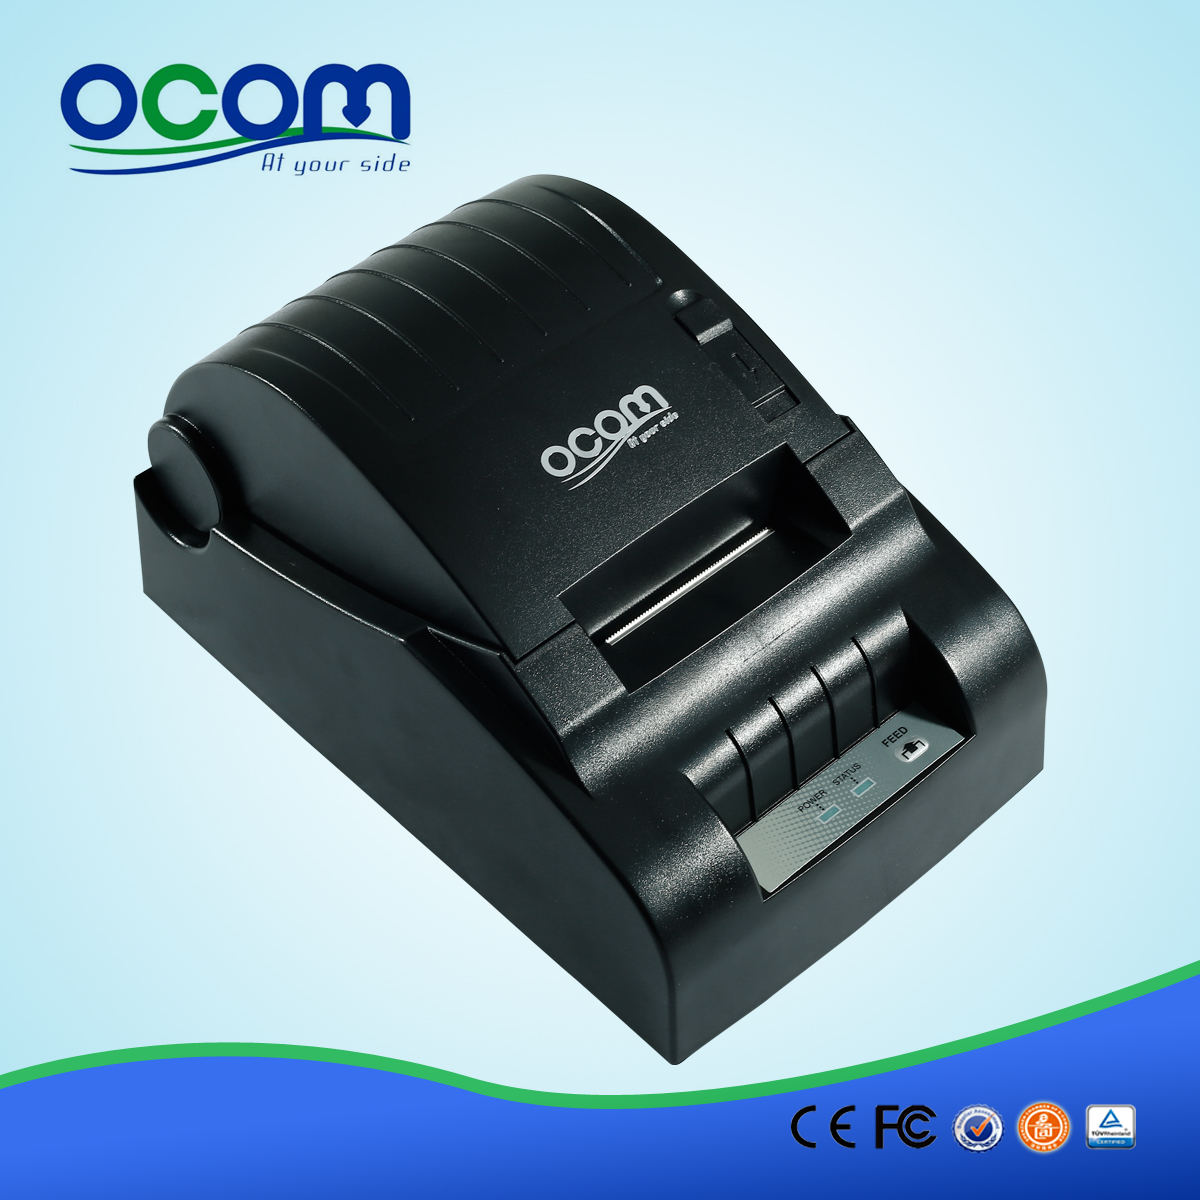 58mm máquina expendedora de billetes impresora con moudle fiable (OCPP-582)